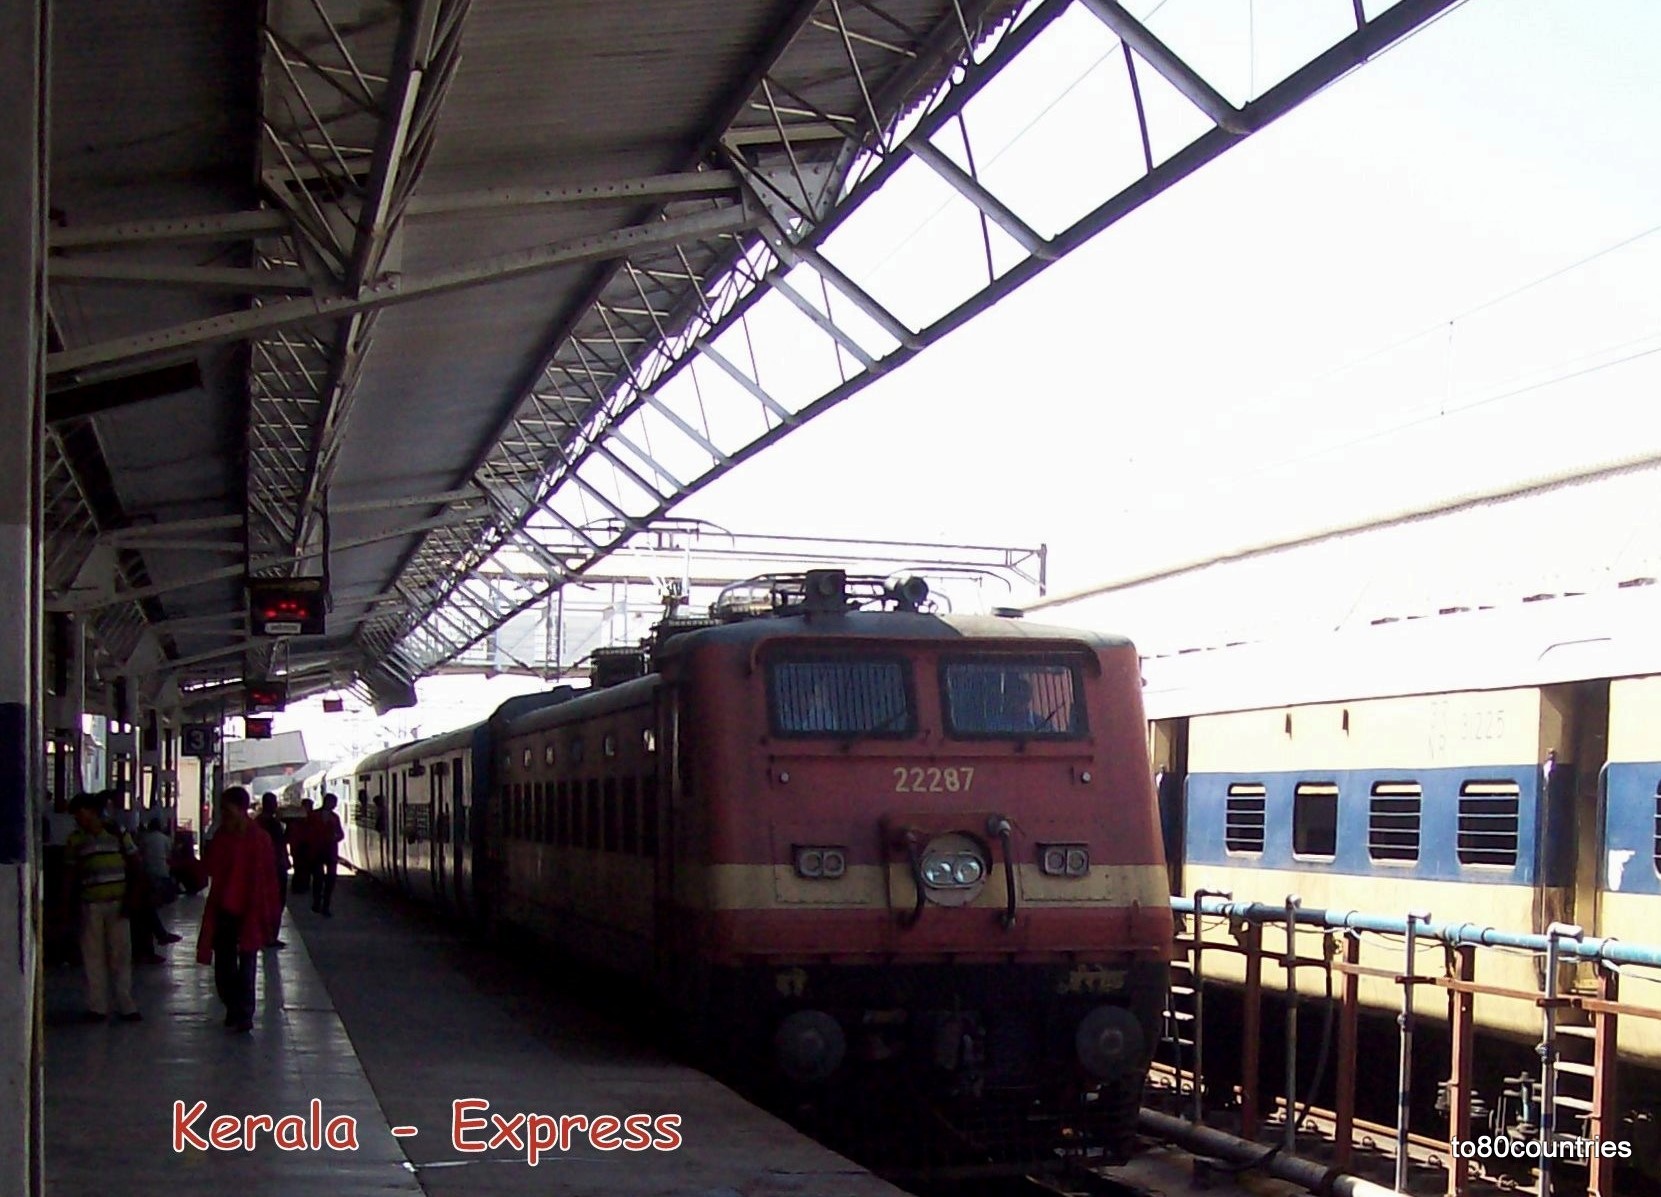 Kerala Express auf dem Weg nach Delhi im Bahnhof Agra Cantt